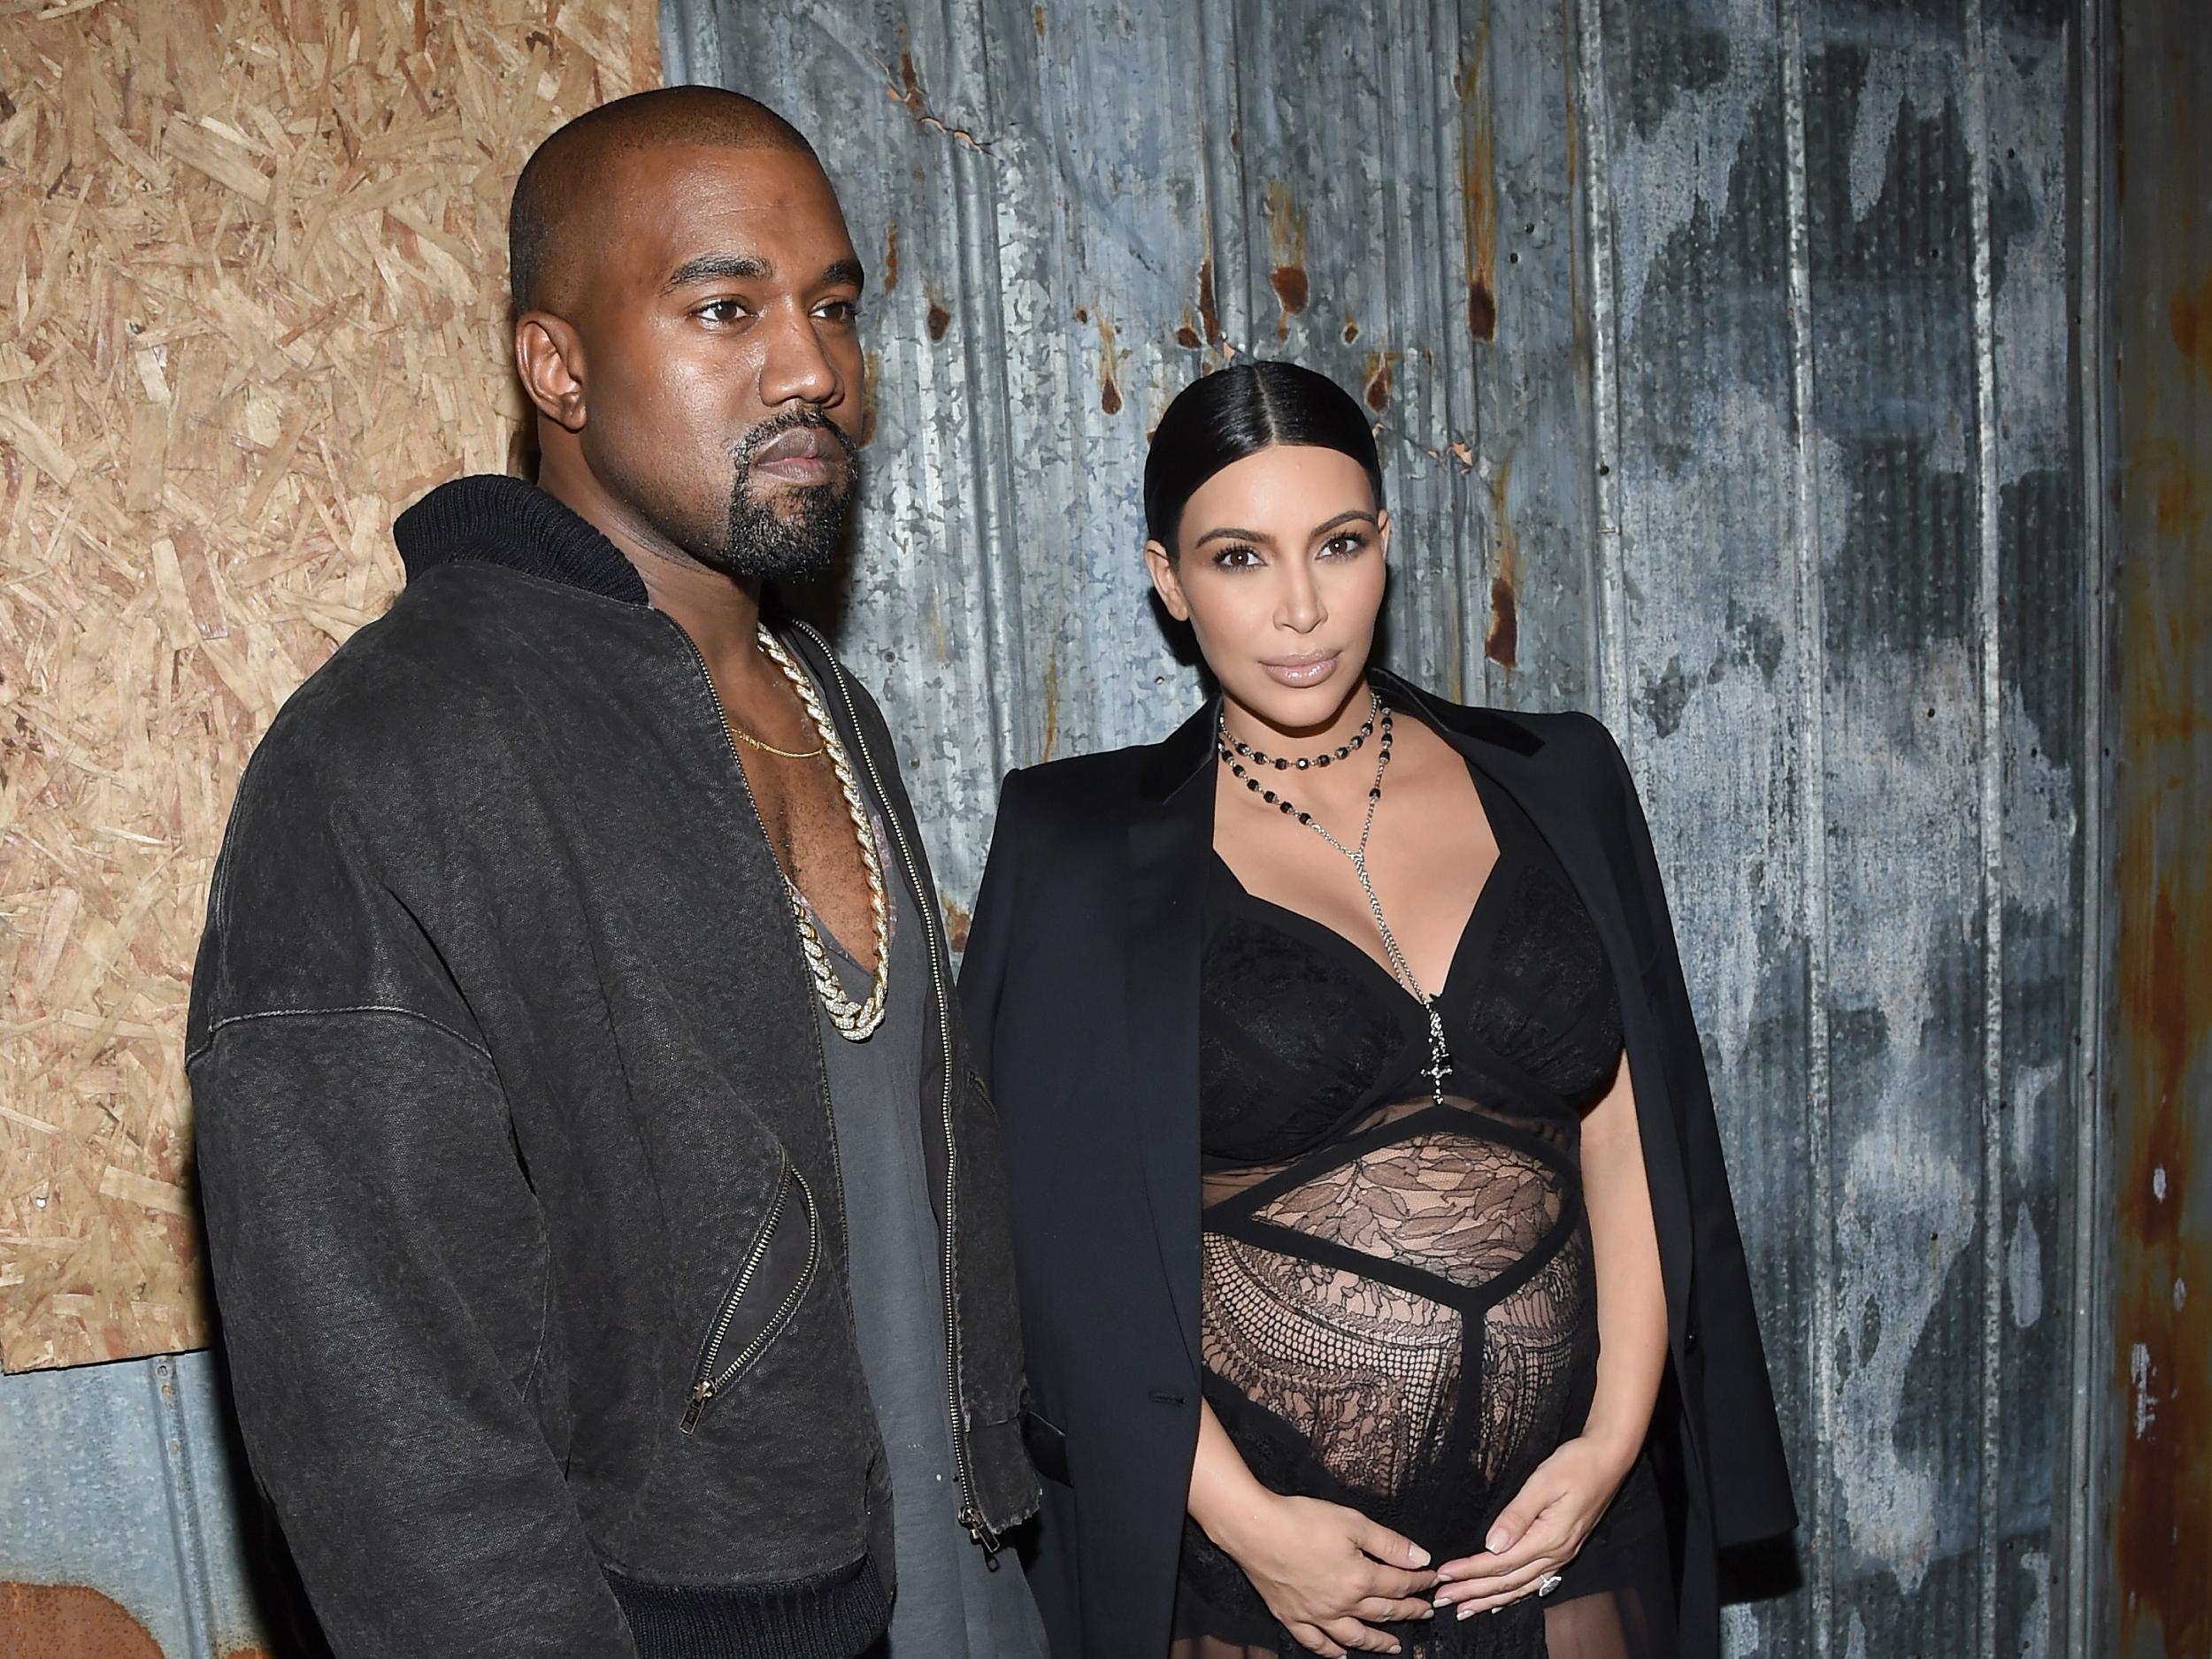 Kanye West and Kim Kardashian named their second child Saint West